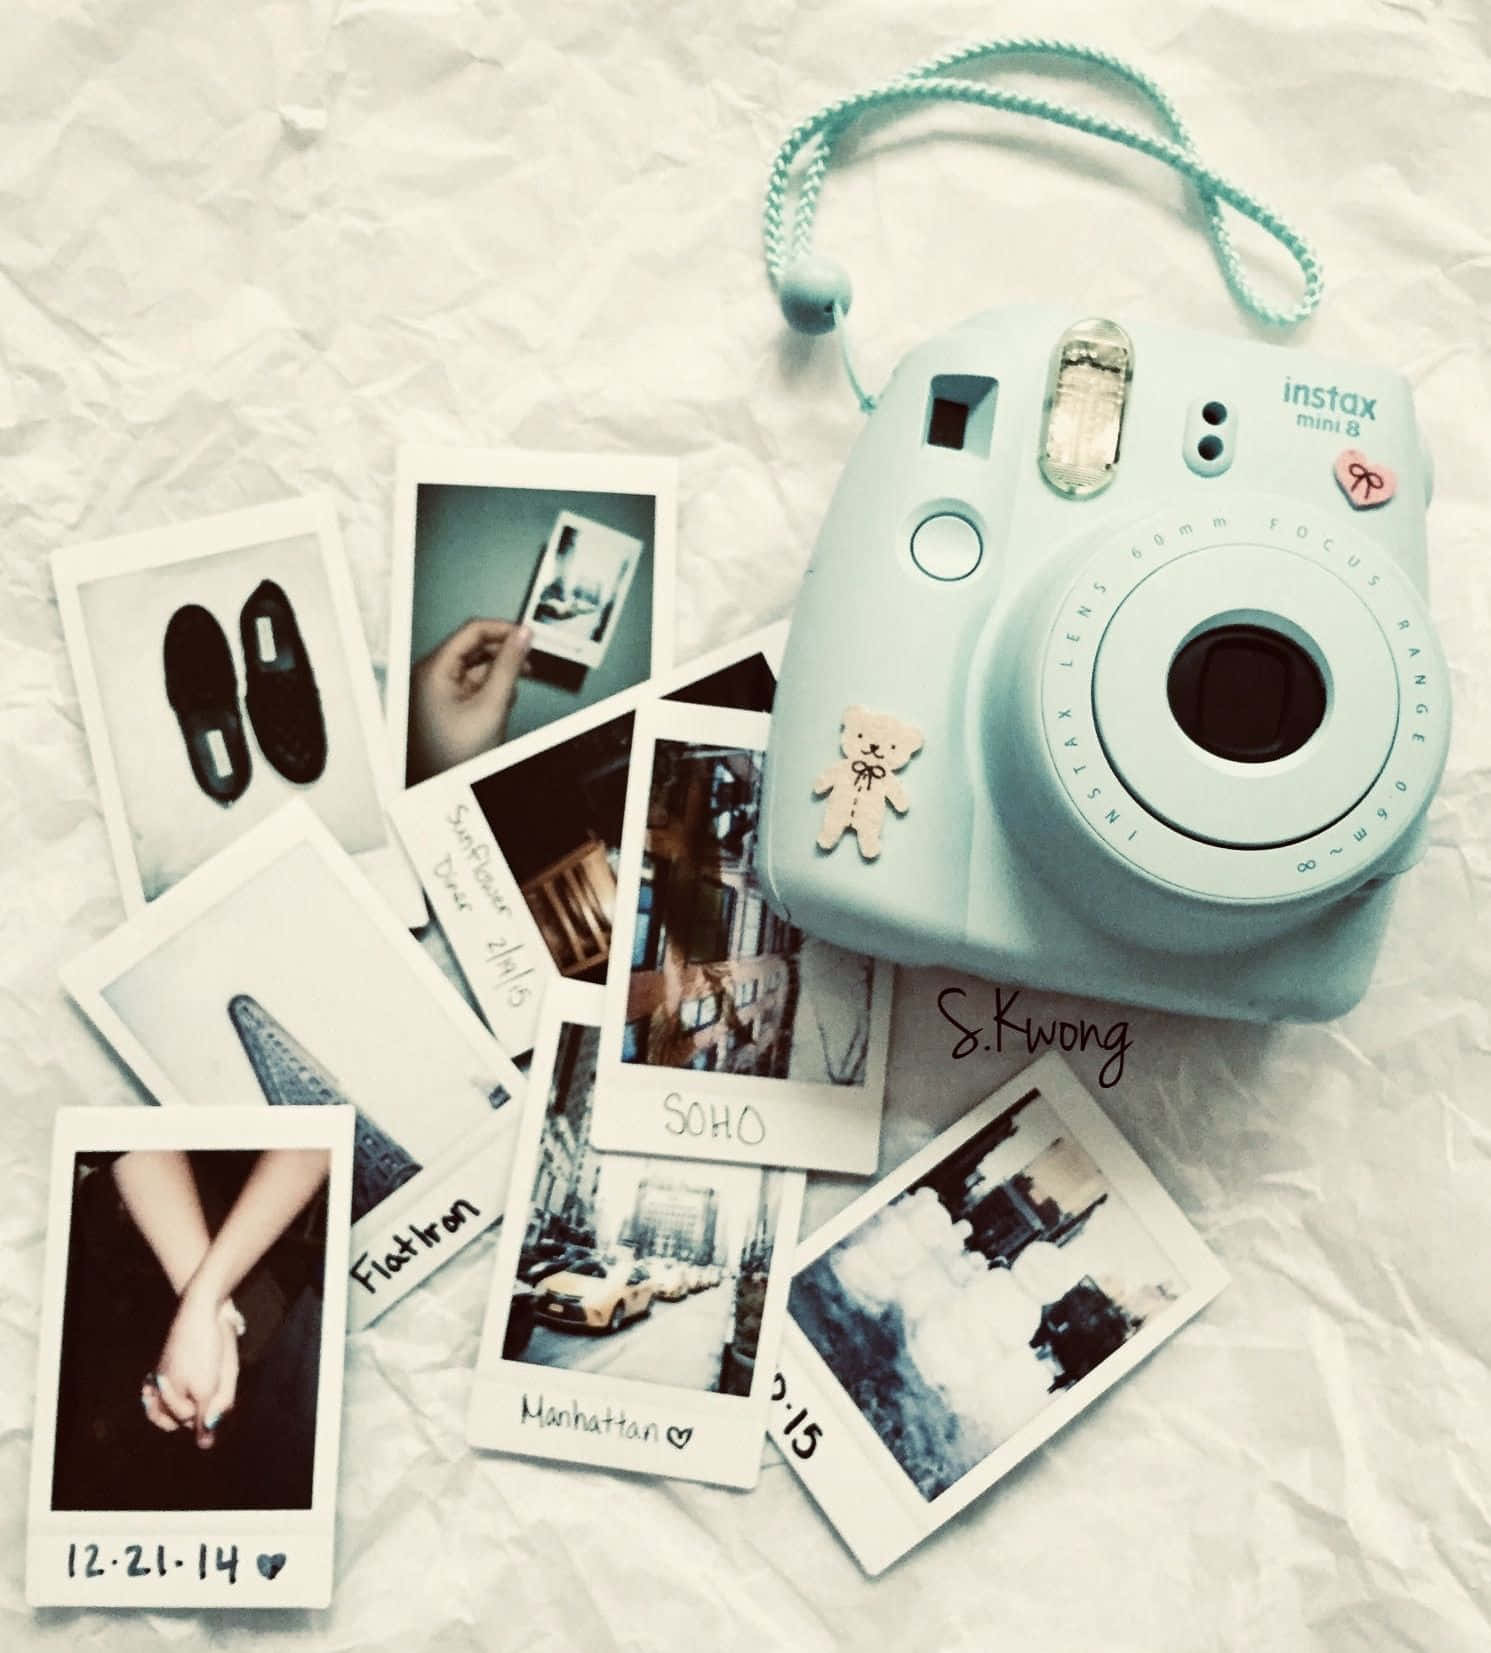 Polaroid Pictures